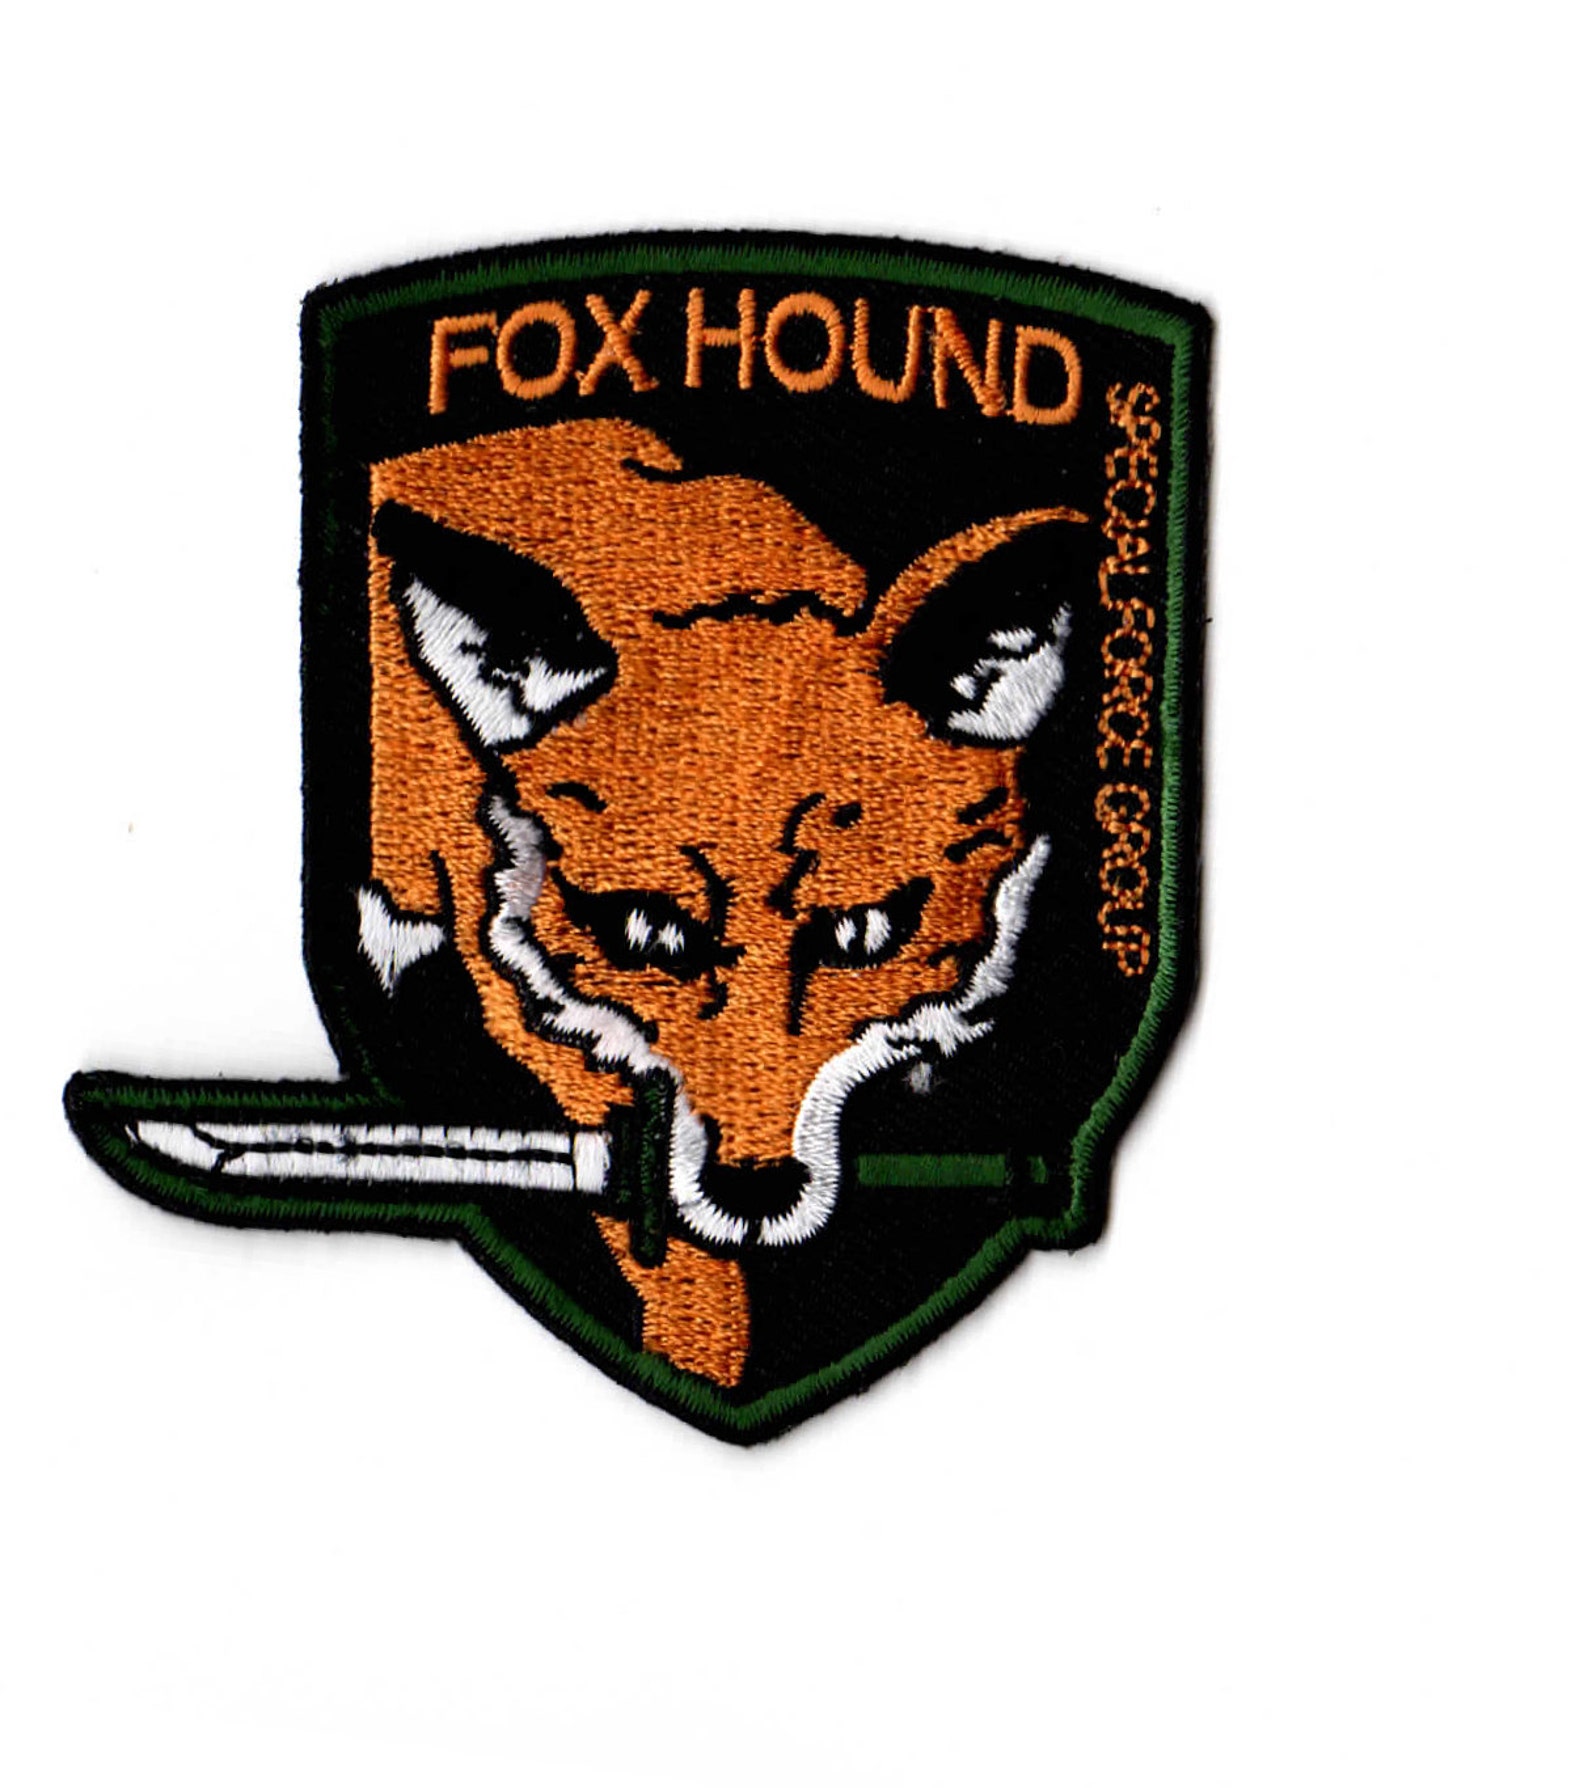 Fox hound. Foxhound Metal Gear нашивка. Foxhound MGS нашивка. Fox Metal Gear Solid нашивка. Foxhound Шеврон.